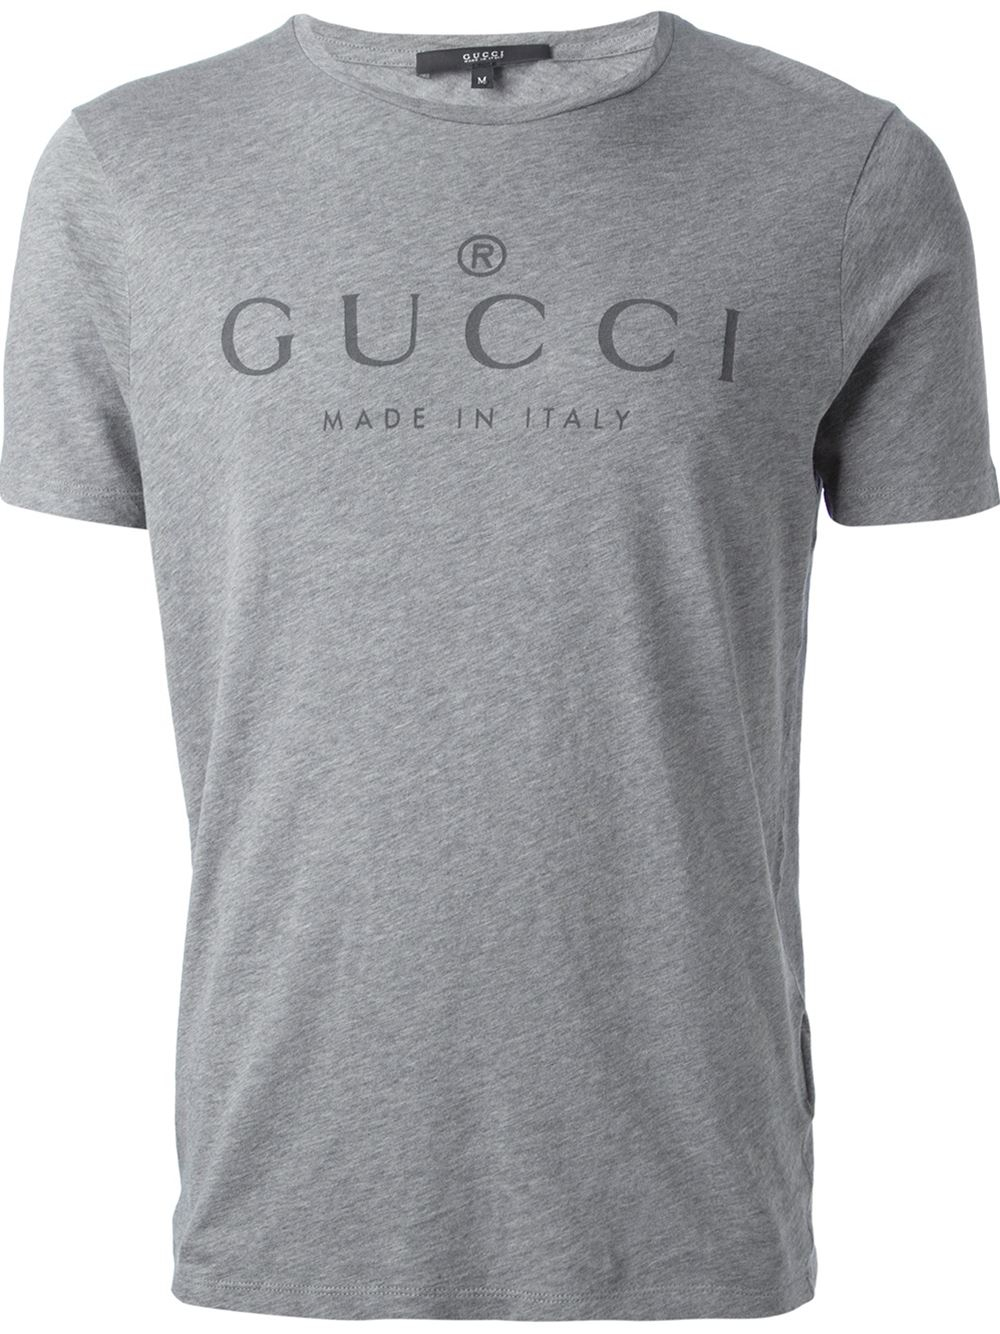 Lyst - Gucci Logo Print Tshirt in Gray for Men